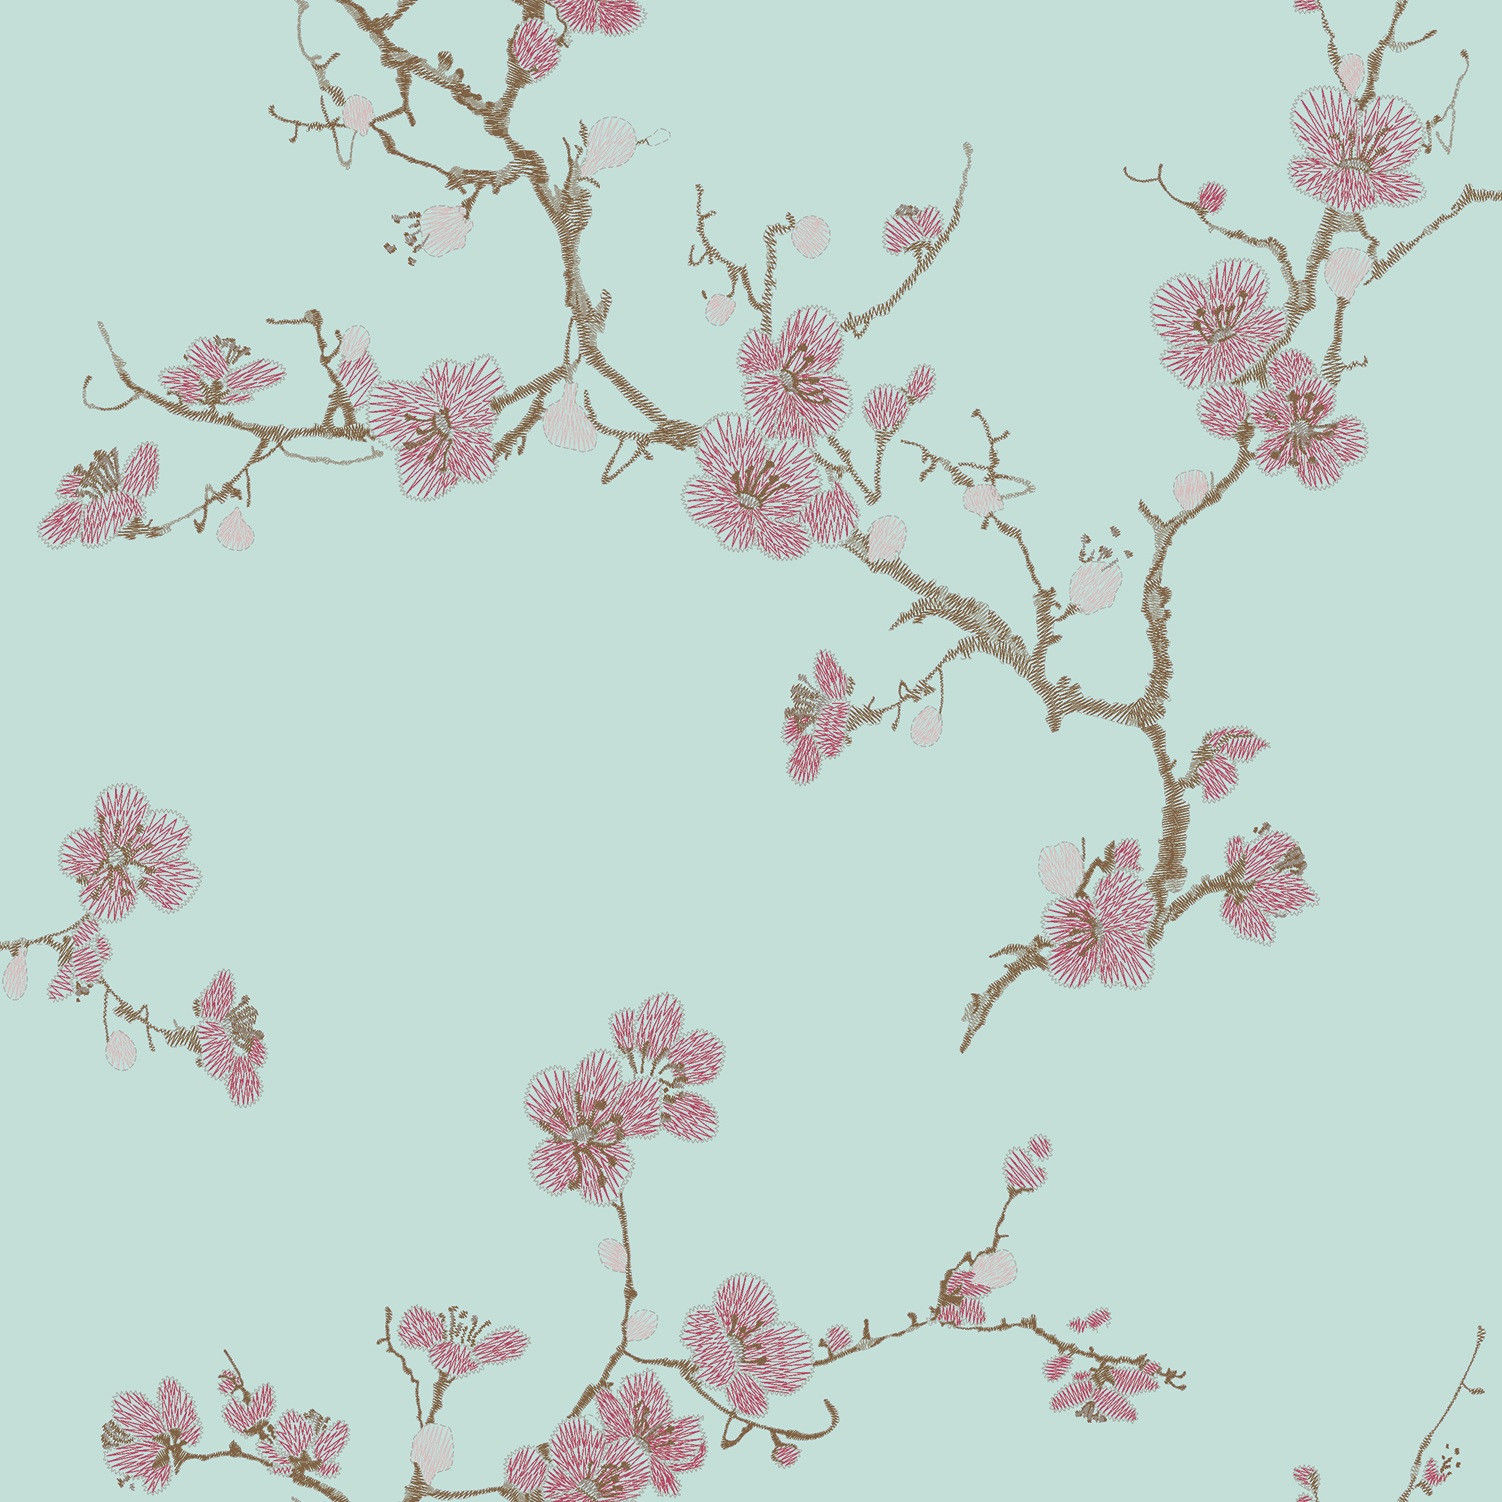  Flower Asian Style Textured Imitate Stitchwork Teal Wallpaper eBay 1502x1502